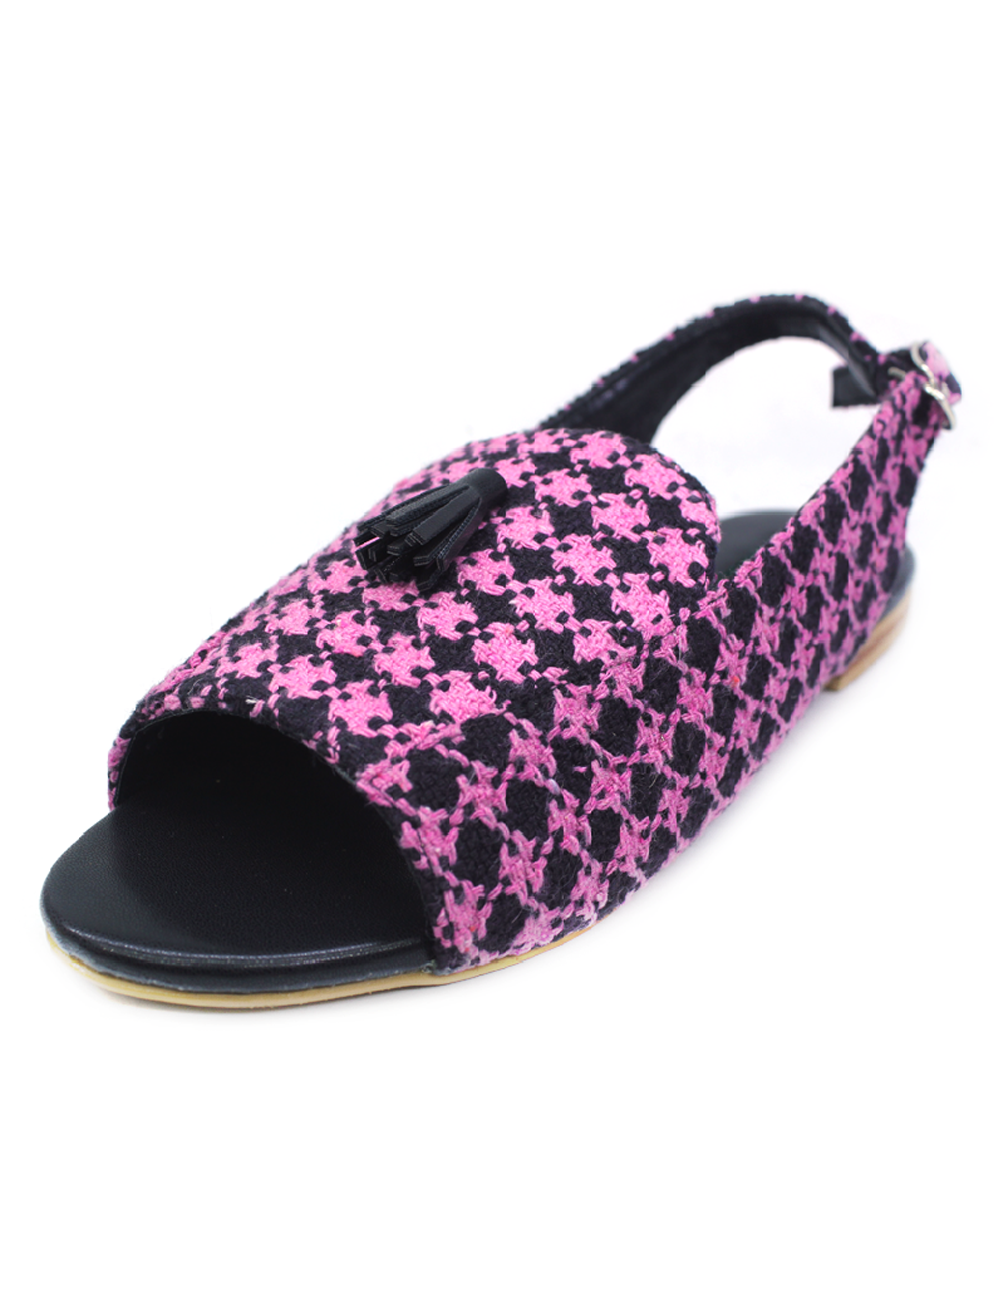 Black, Pink Fabric Sandal